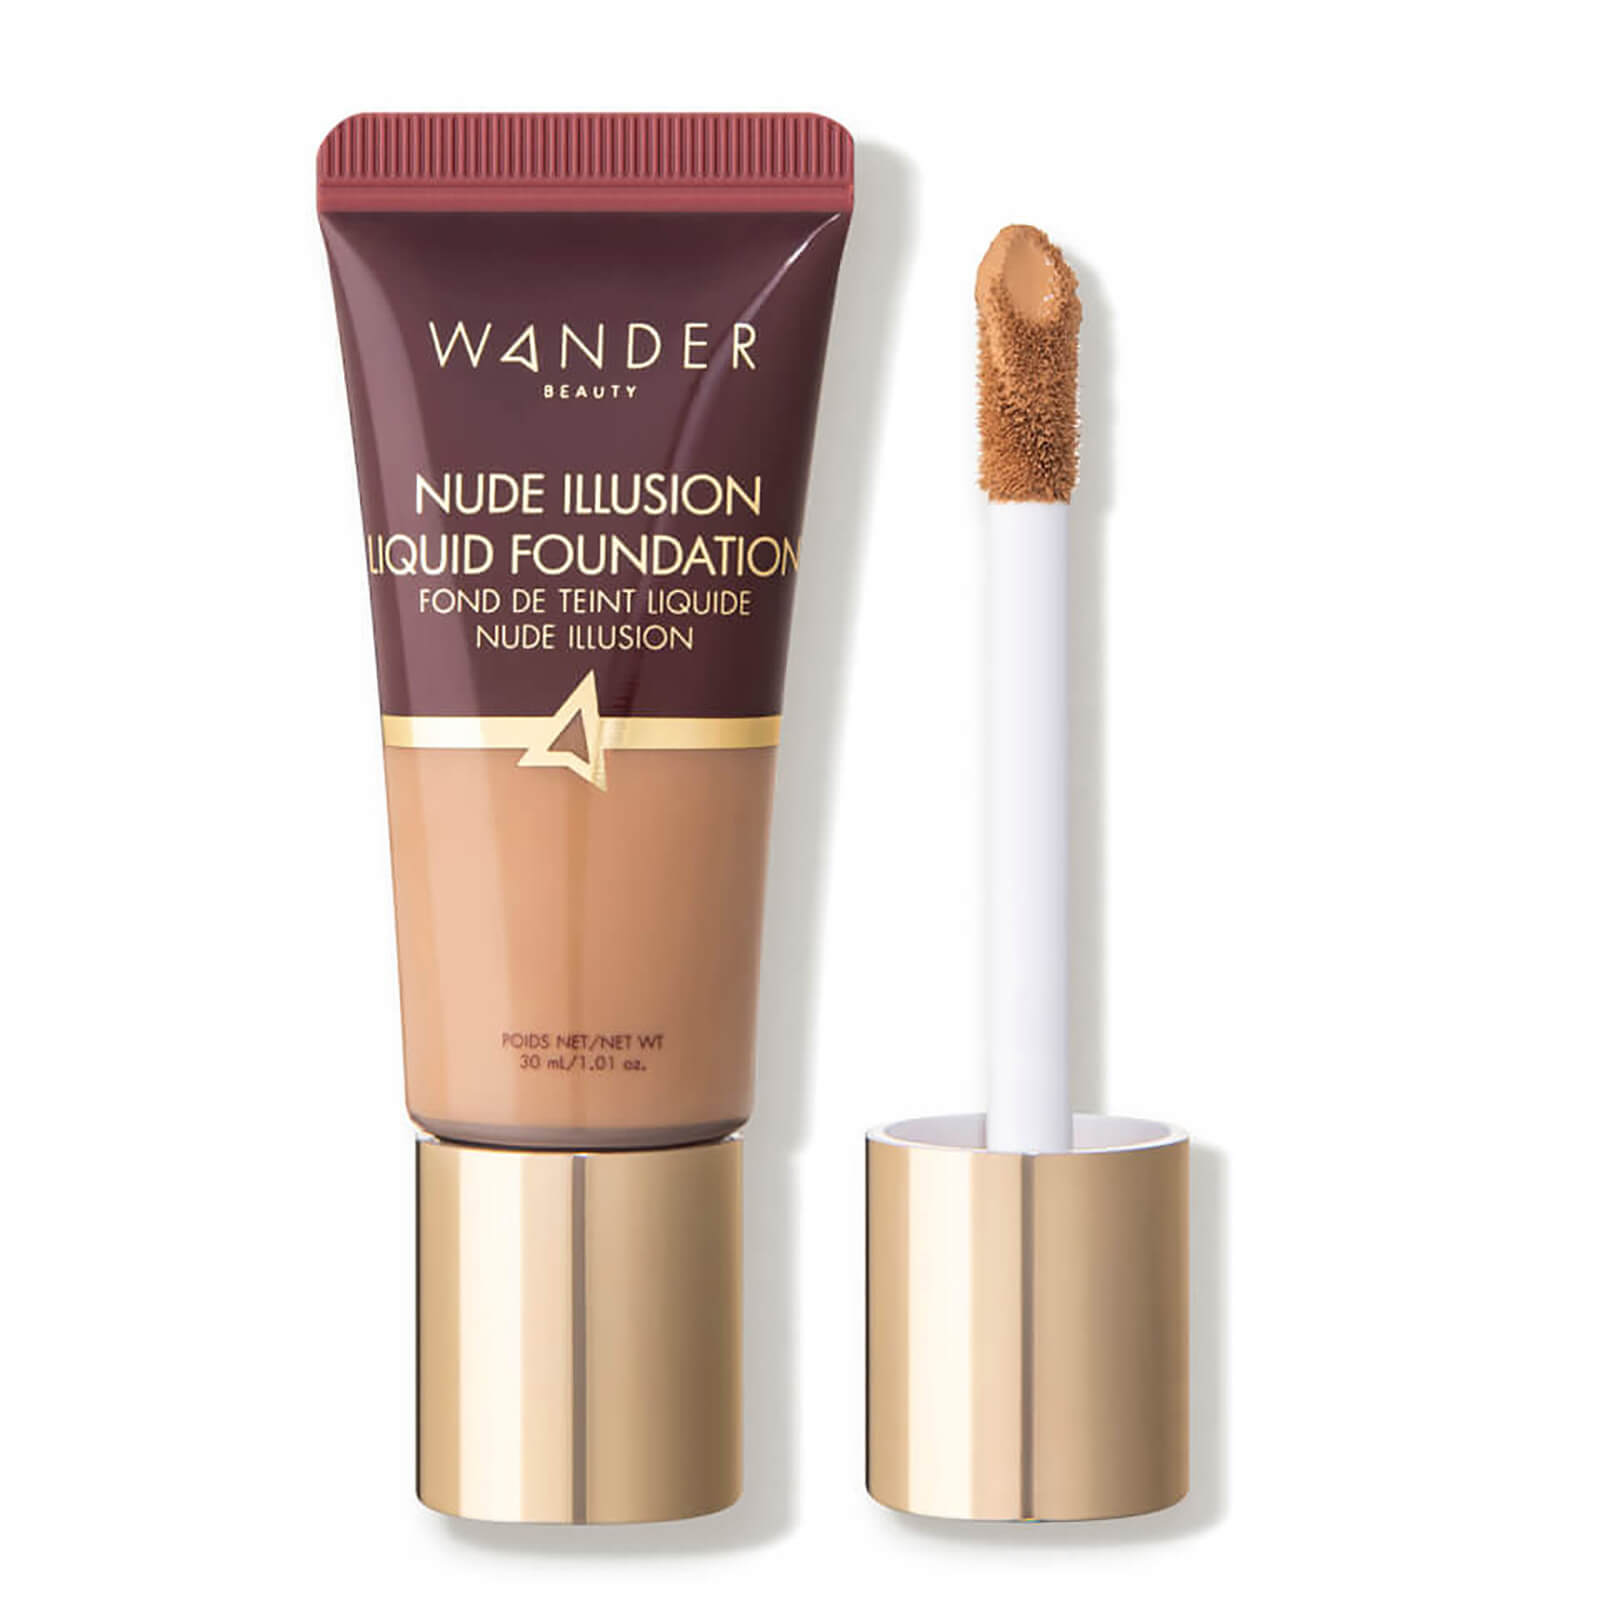 Wander Beauty Nude Illusion Liquid Foundation 1.01 oz (Various Shades) - Golden Medium